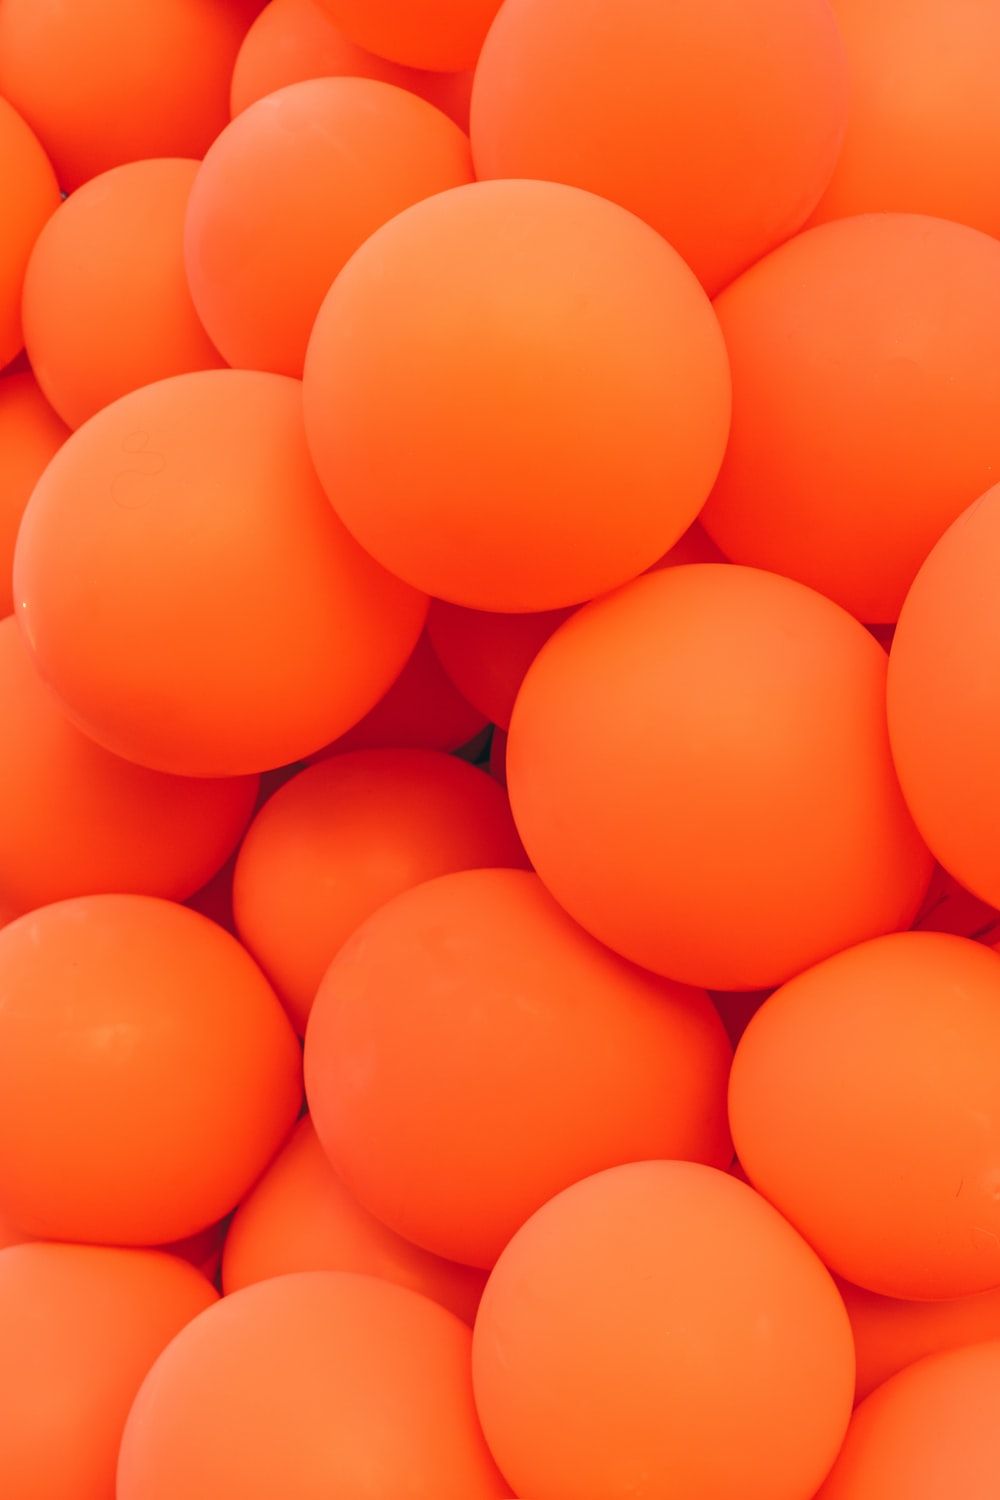 pink and orange balloons photo